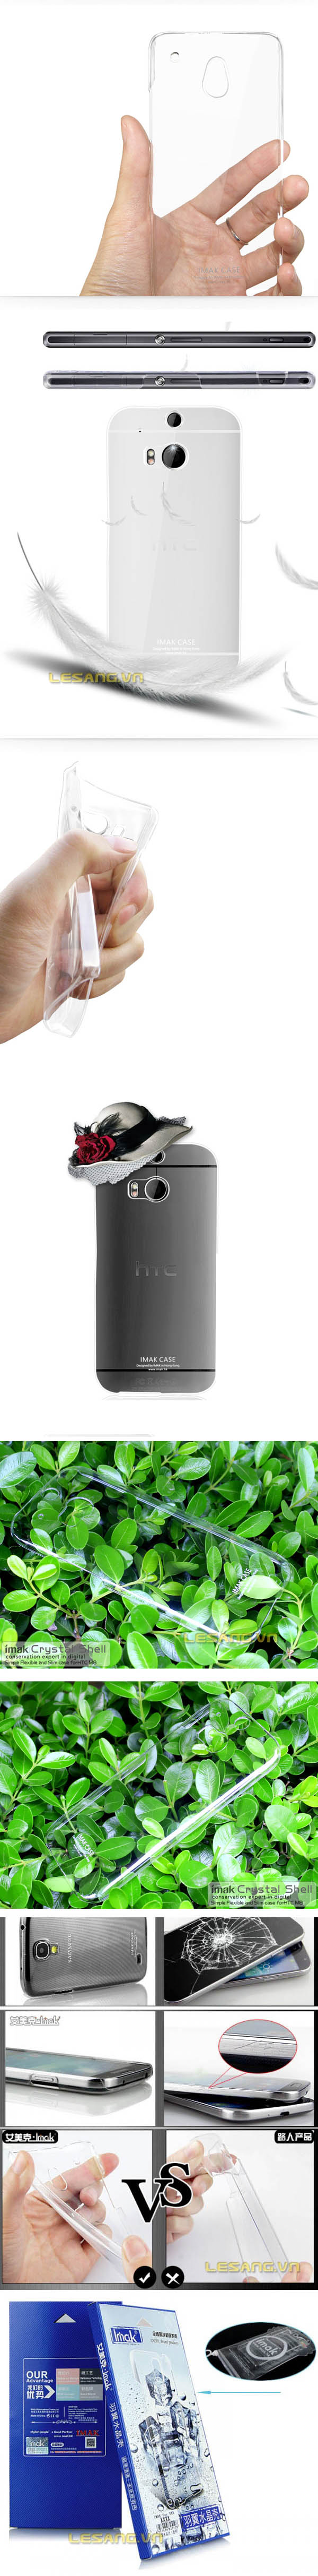 Ốp lưng HTC One M8 imak trong suốt 2365